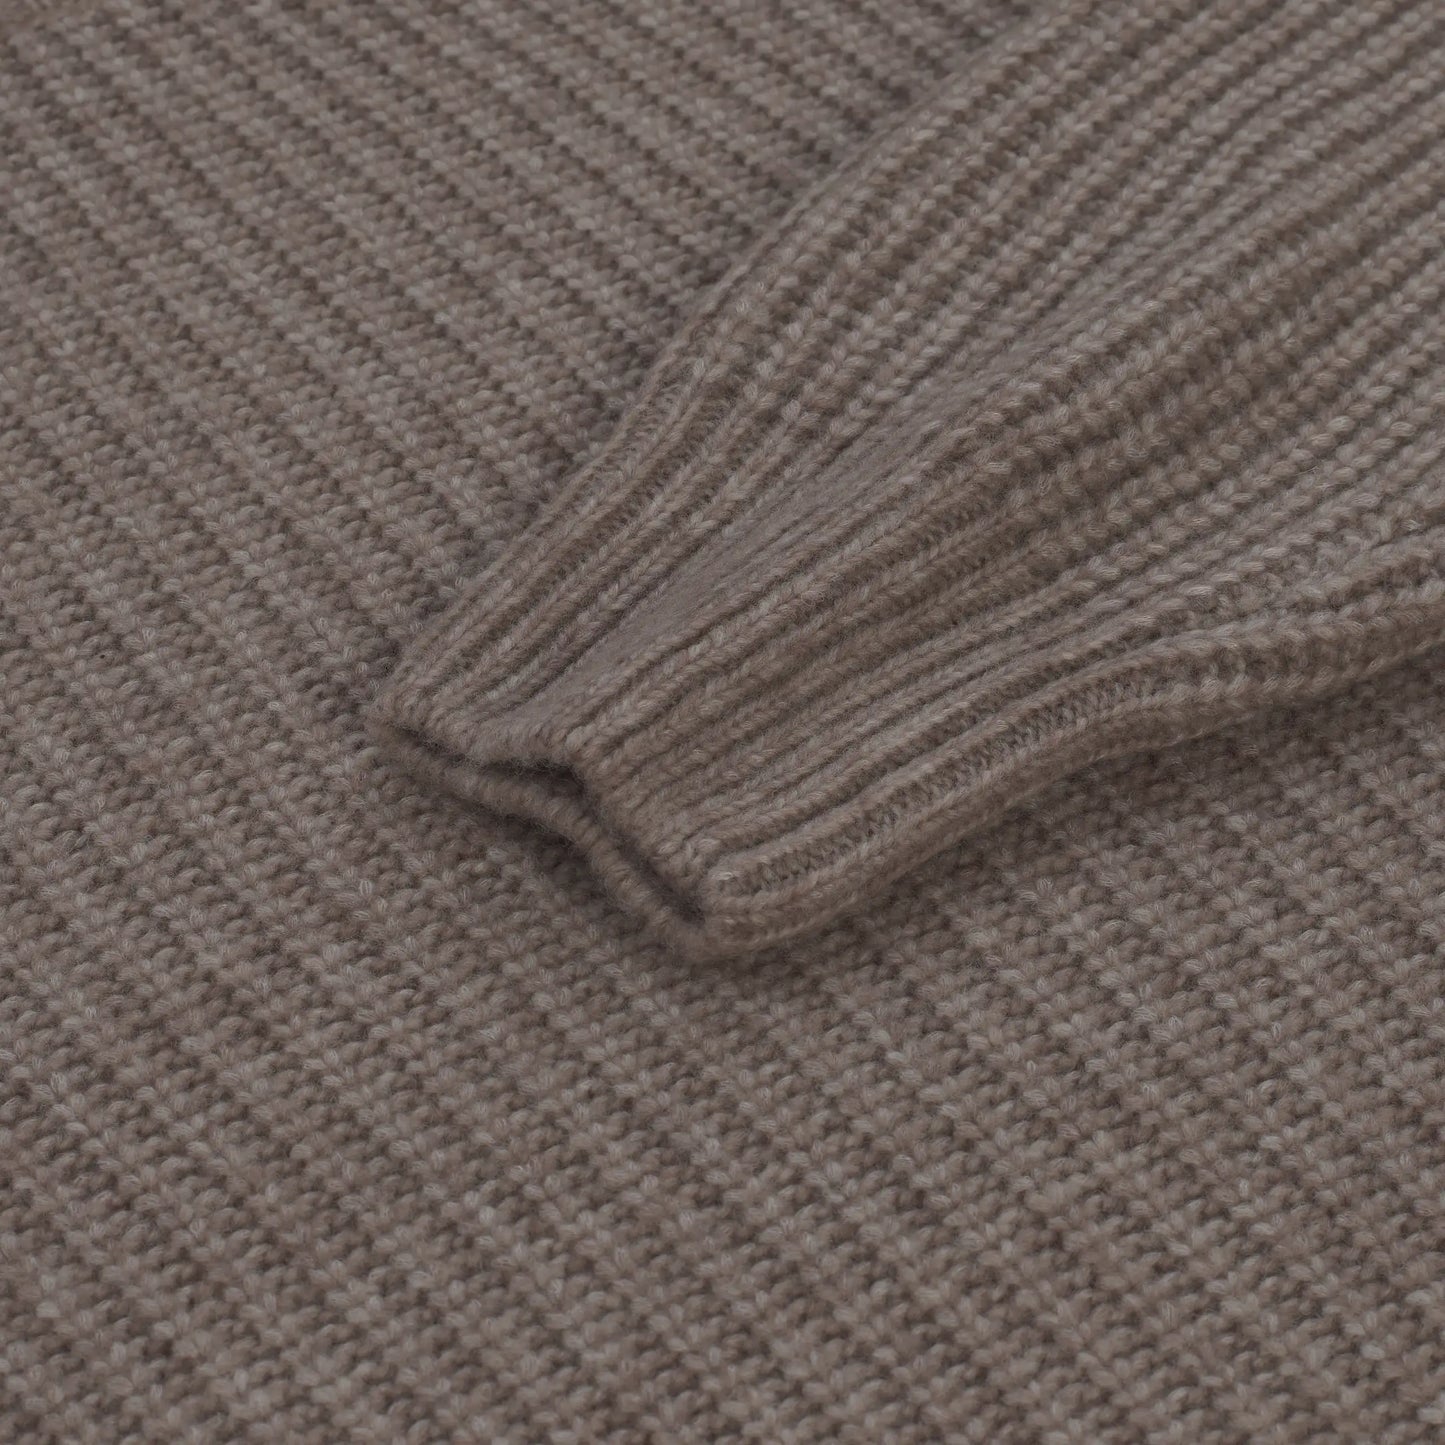 Wool Turtleneck Sweater in Brown